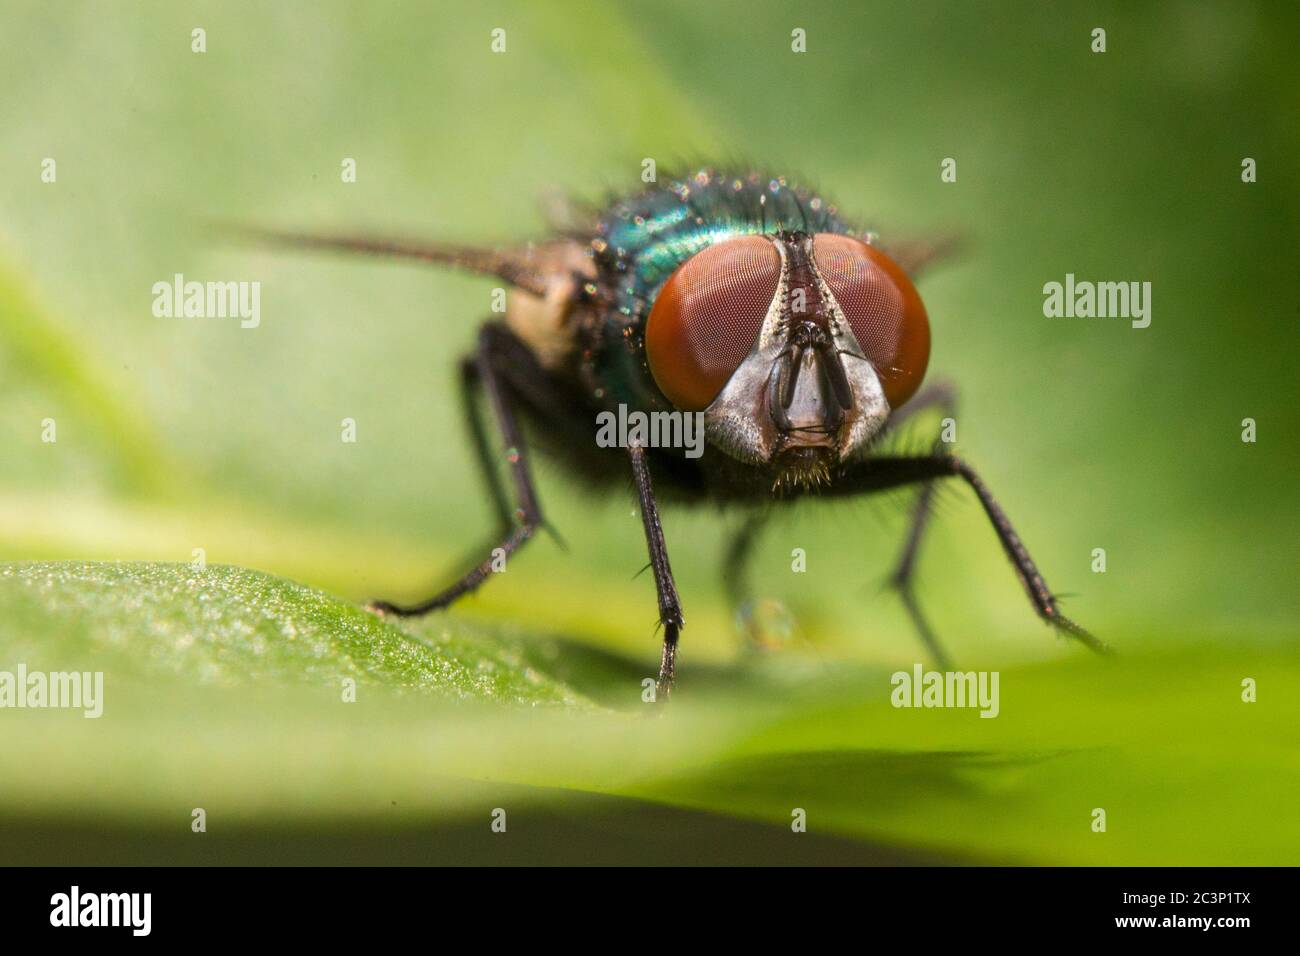 The common green bottle fly (Lucilia sericata) Stock Photo